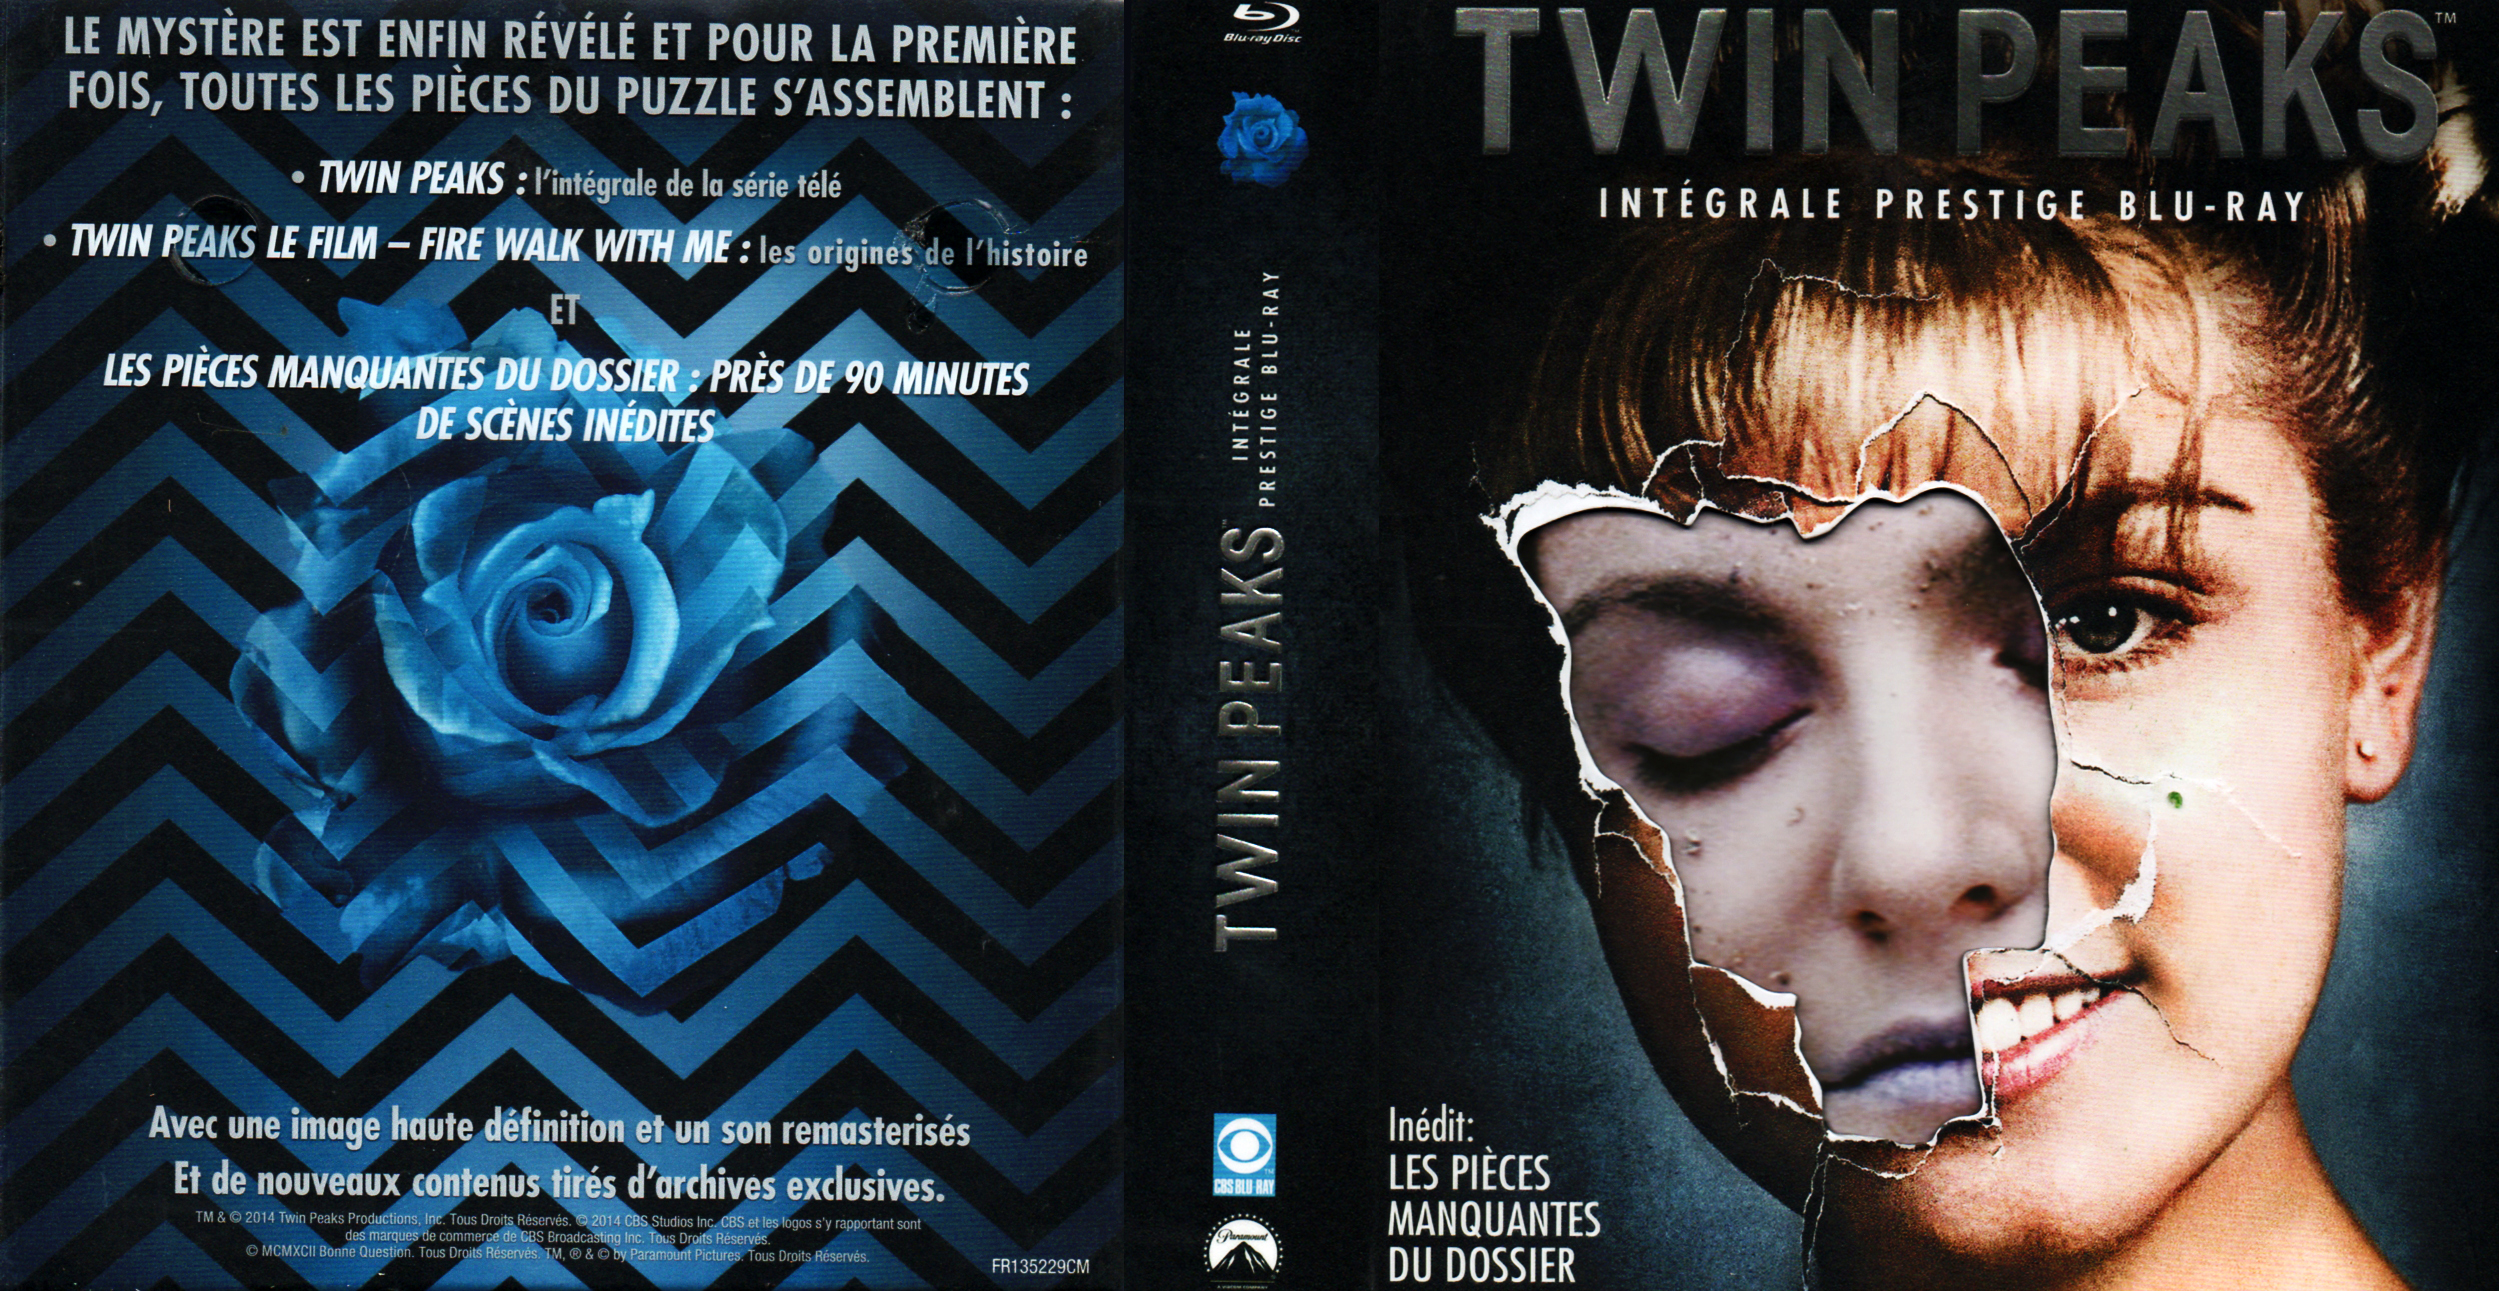 Jaquette DVD Twin Peaks (BLU-RAY) v2